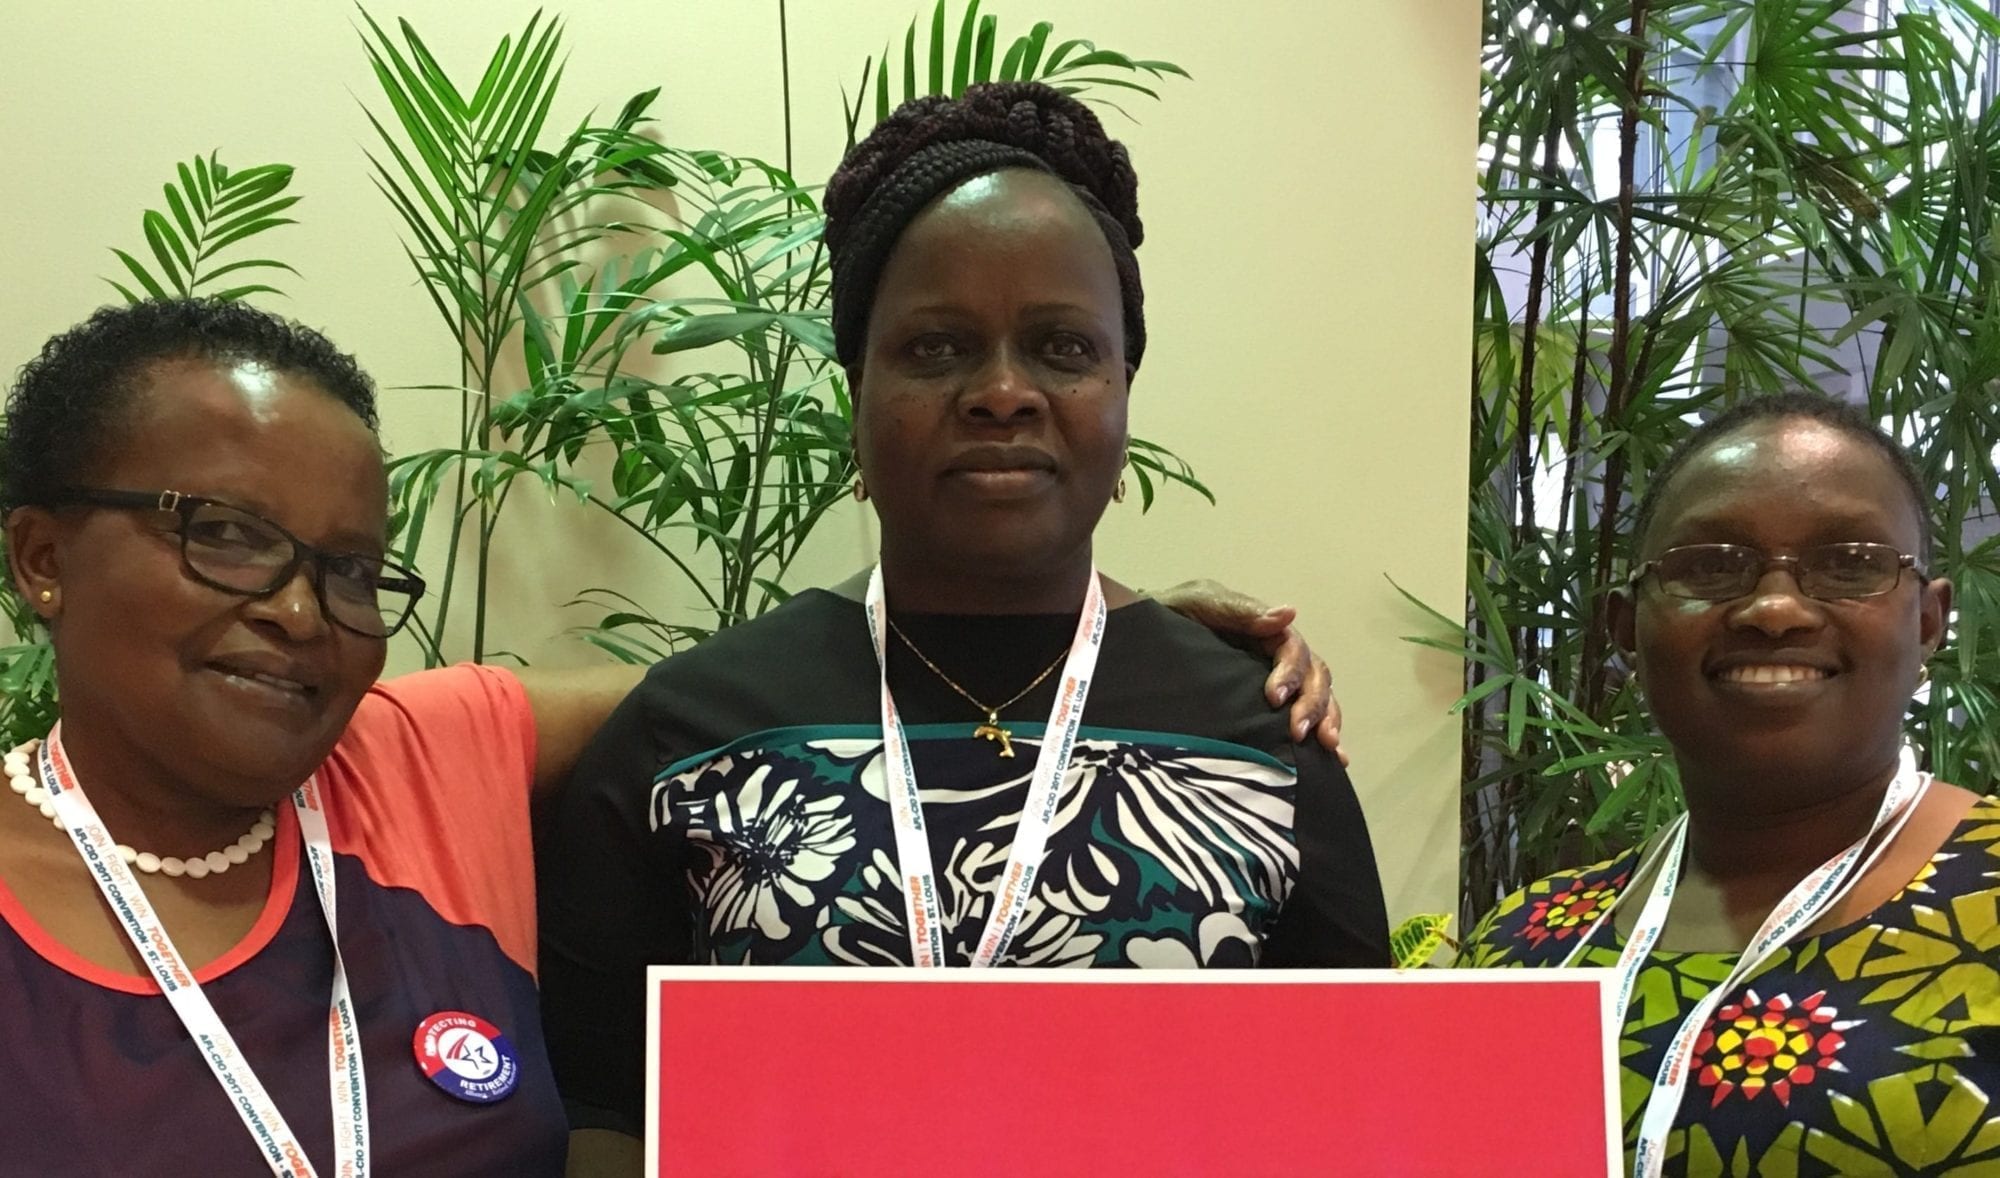 Brazil, Kenya Women Leaders on Front Line of Change